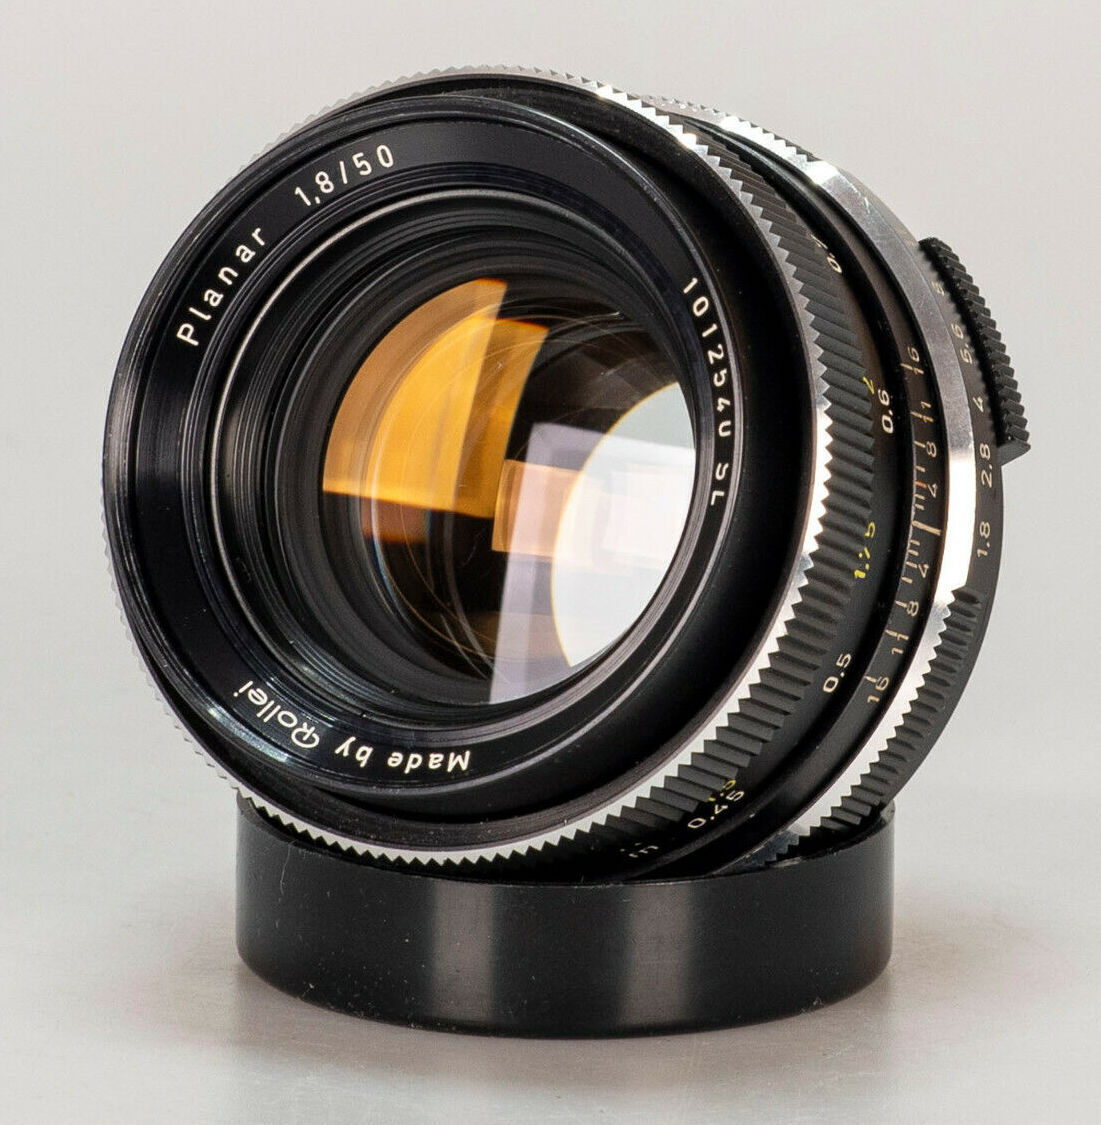 Carl Zeiss Planar [HFT] 50mm F/1.8 | LENS-DB.COM